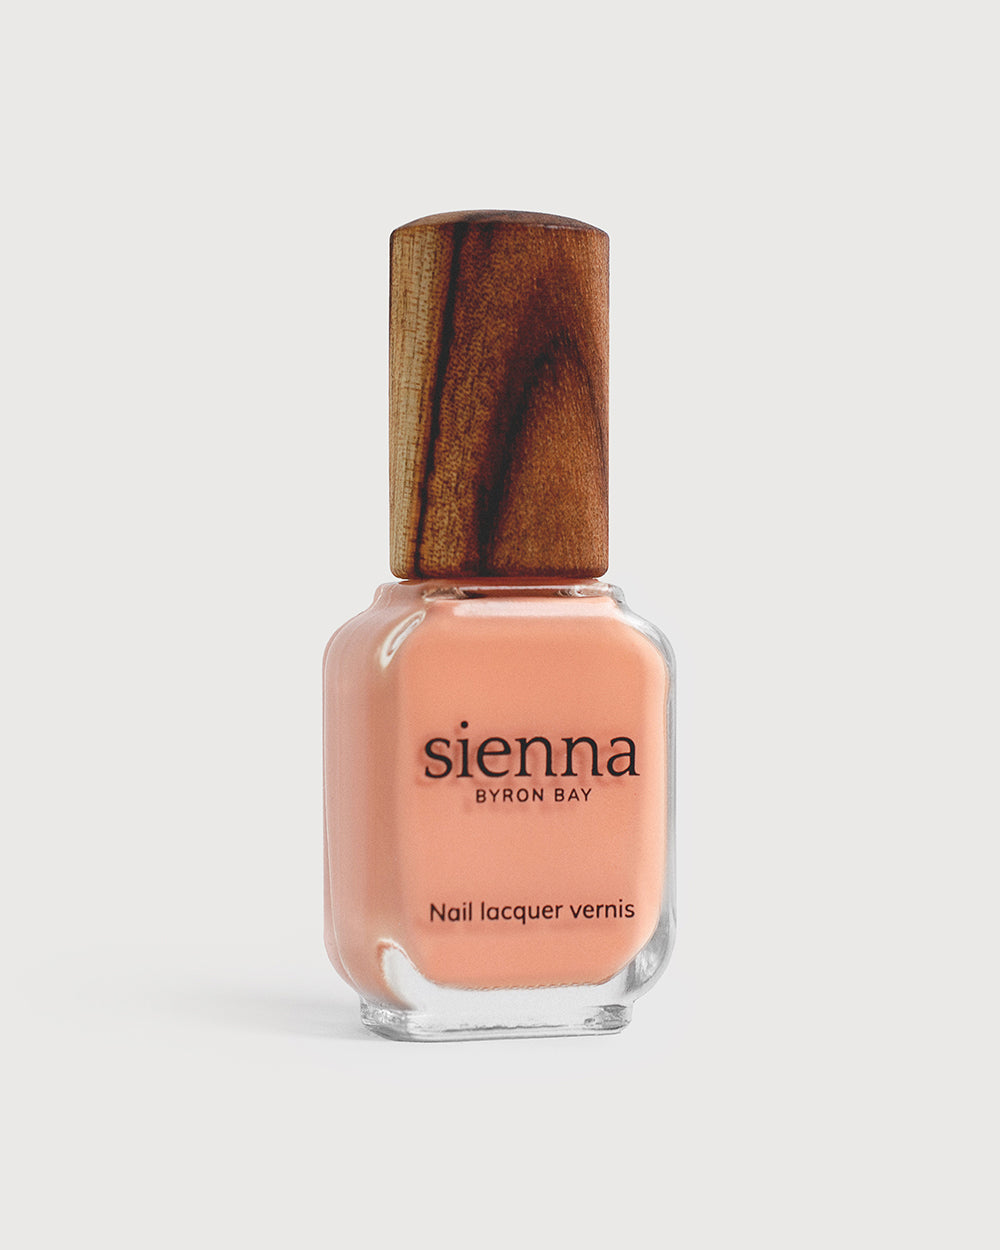 peach blush nail polish